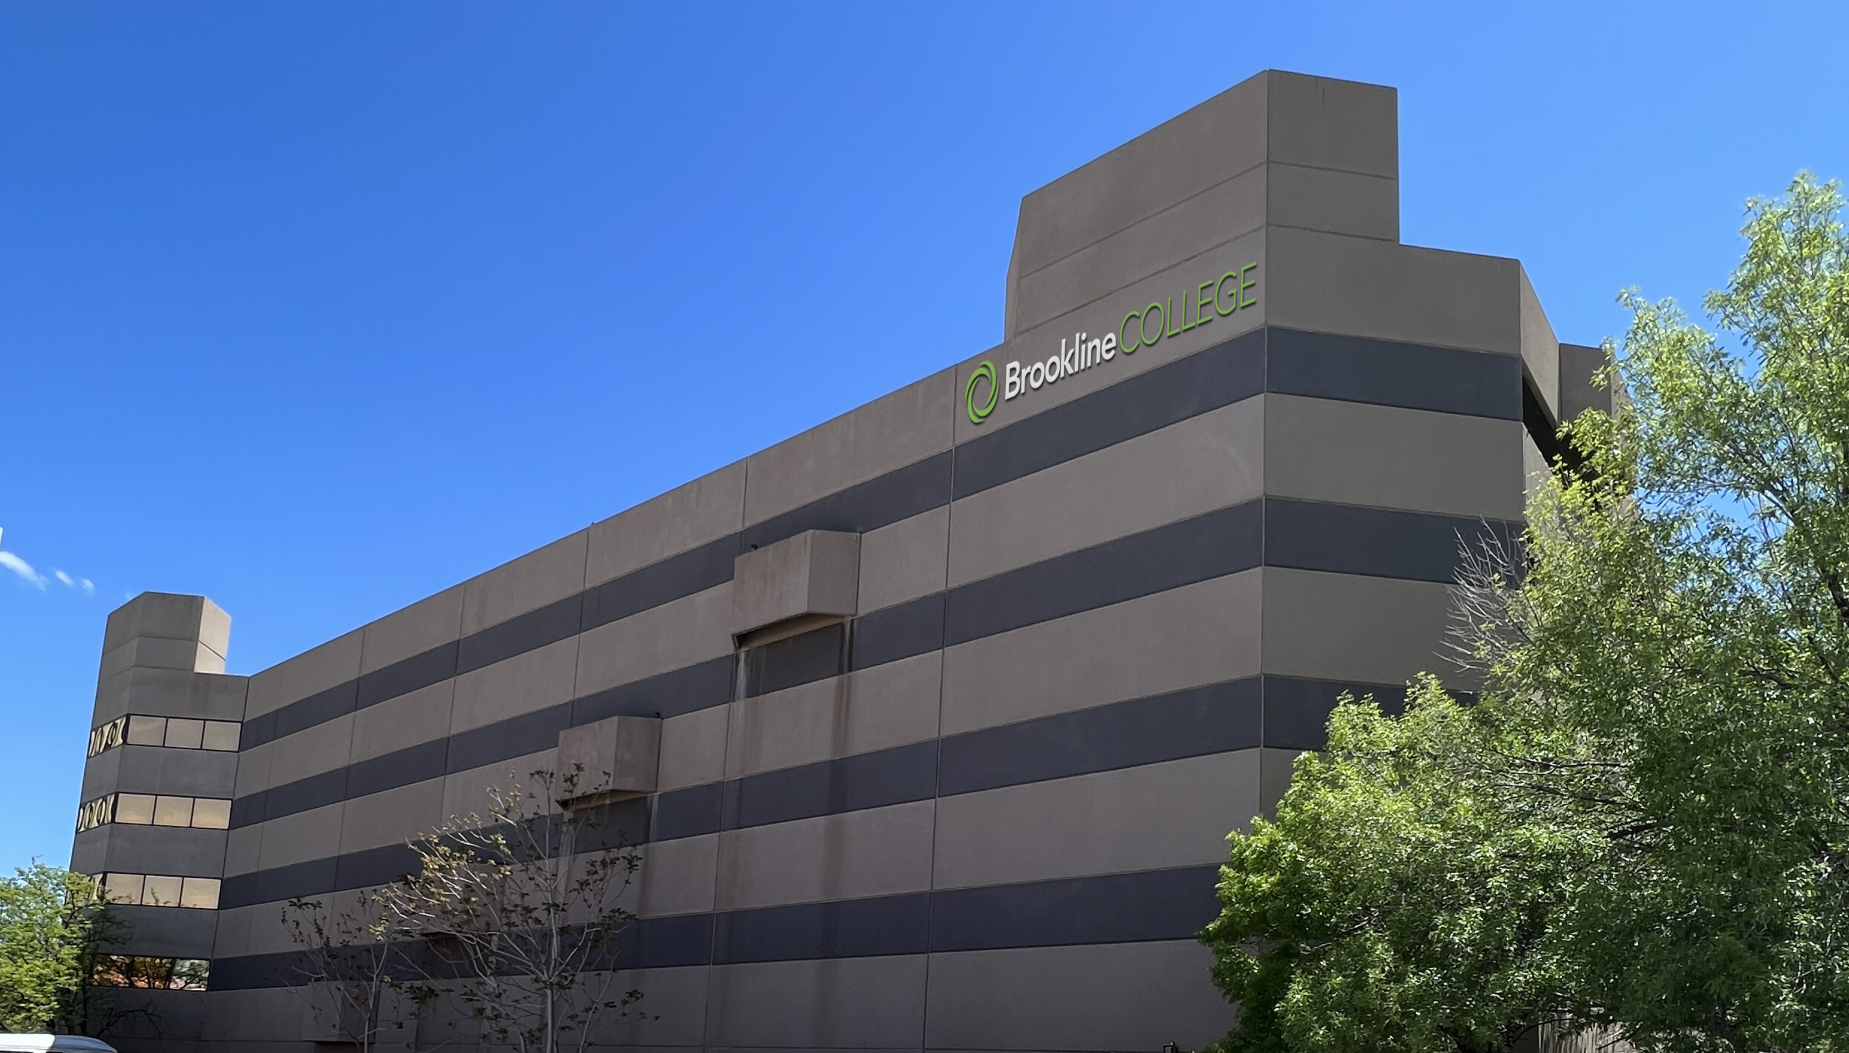 A look at the exterior of Brookline College's new Albuquerque campus.